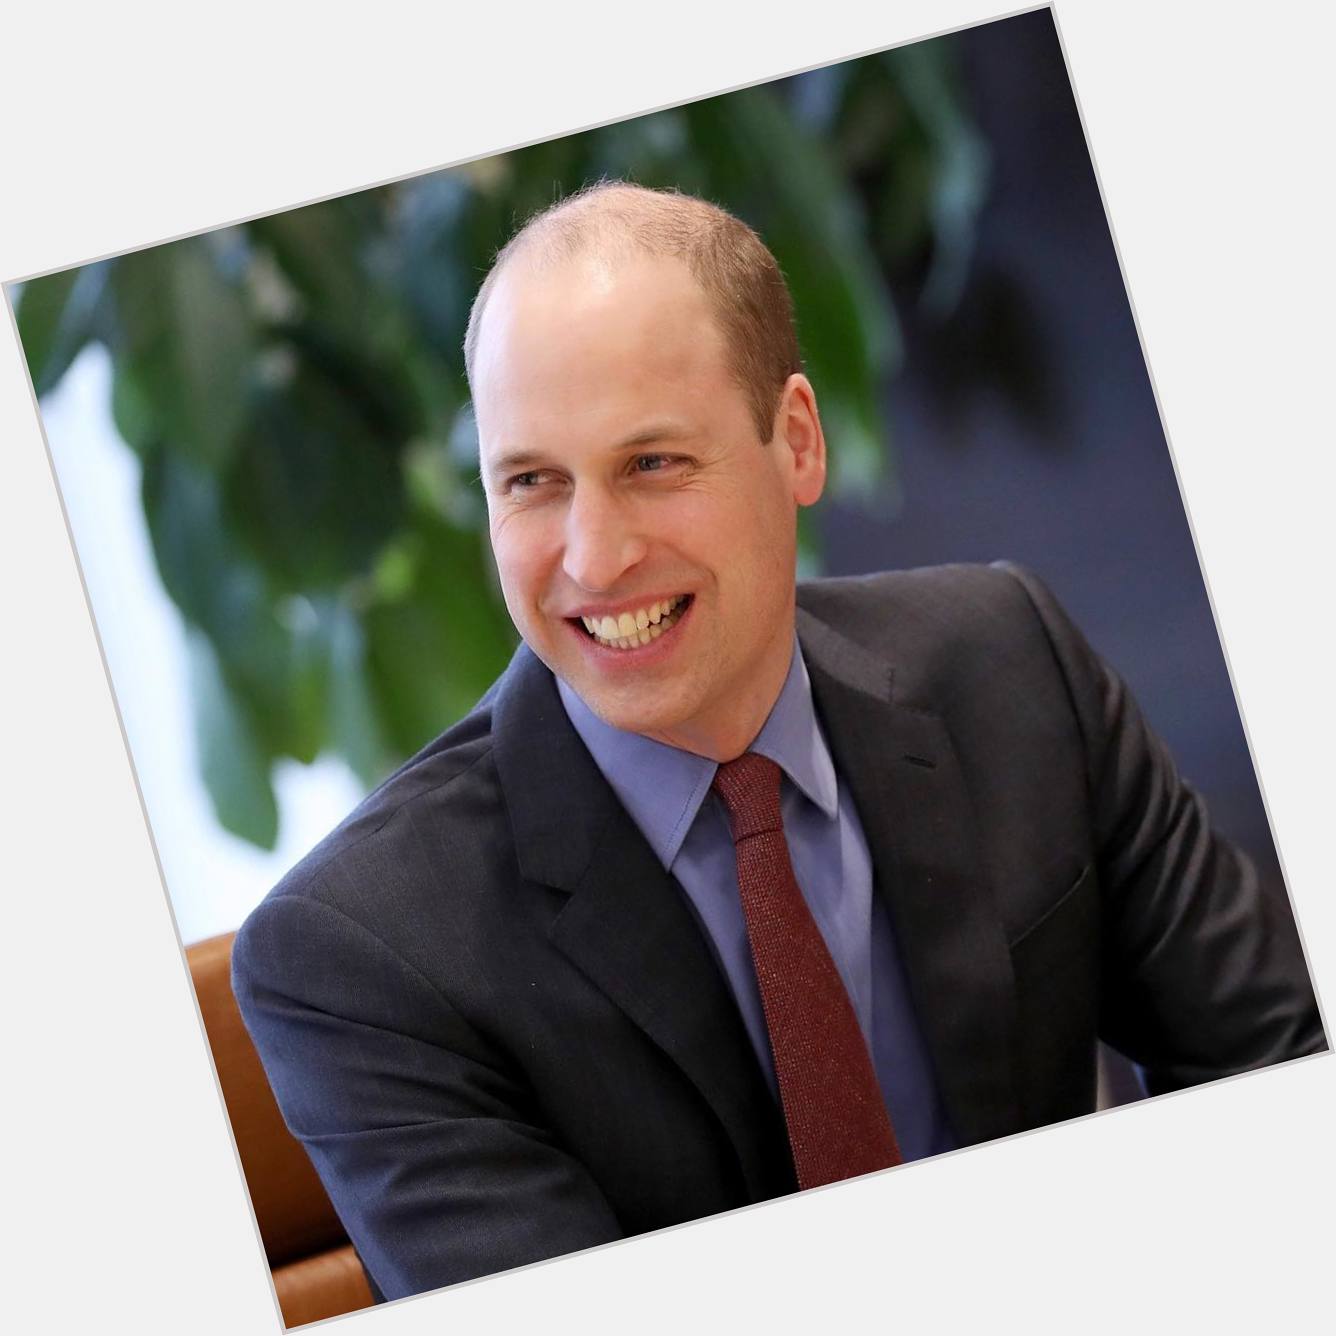 A very happy birthday to HRH Prince William, Duke of Cambridge. 